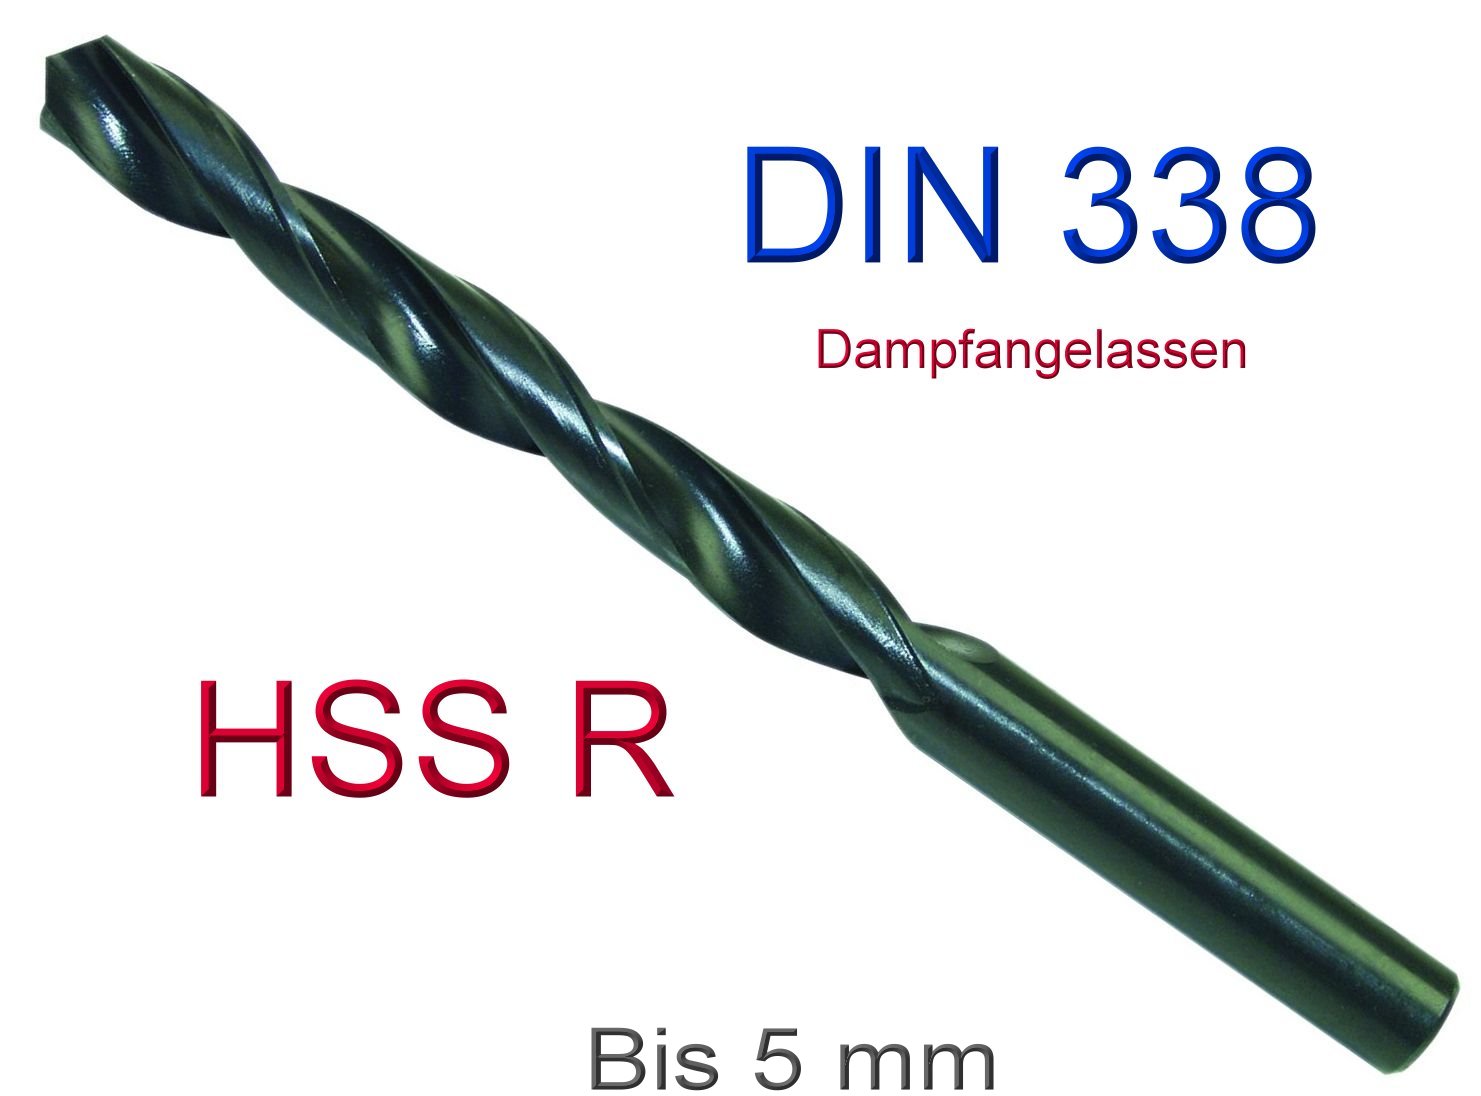 DIN 338 CNC QUALITÄT Spiralbohrer Ø 6,0 mm 